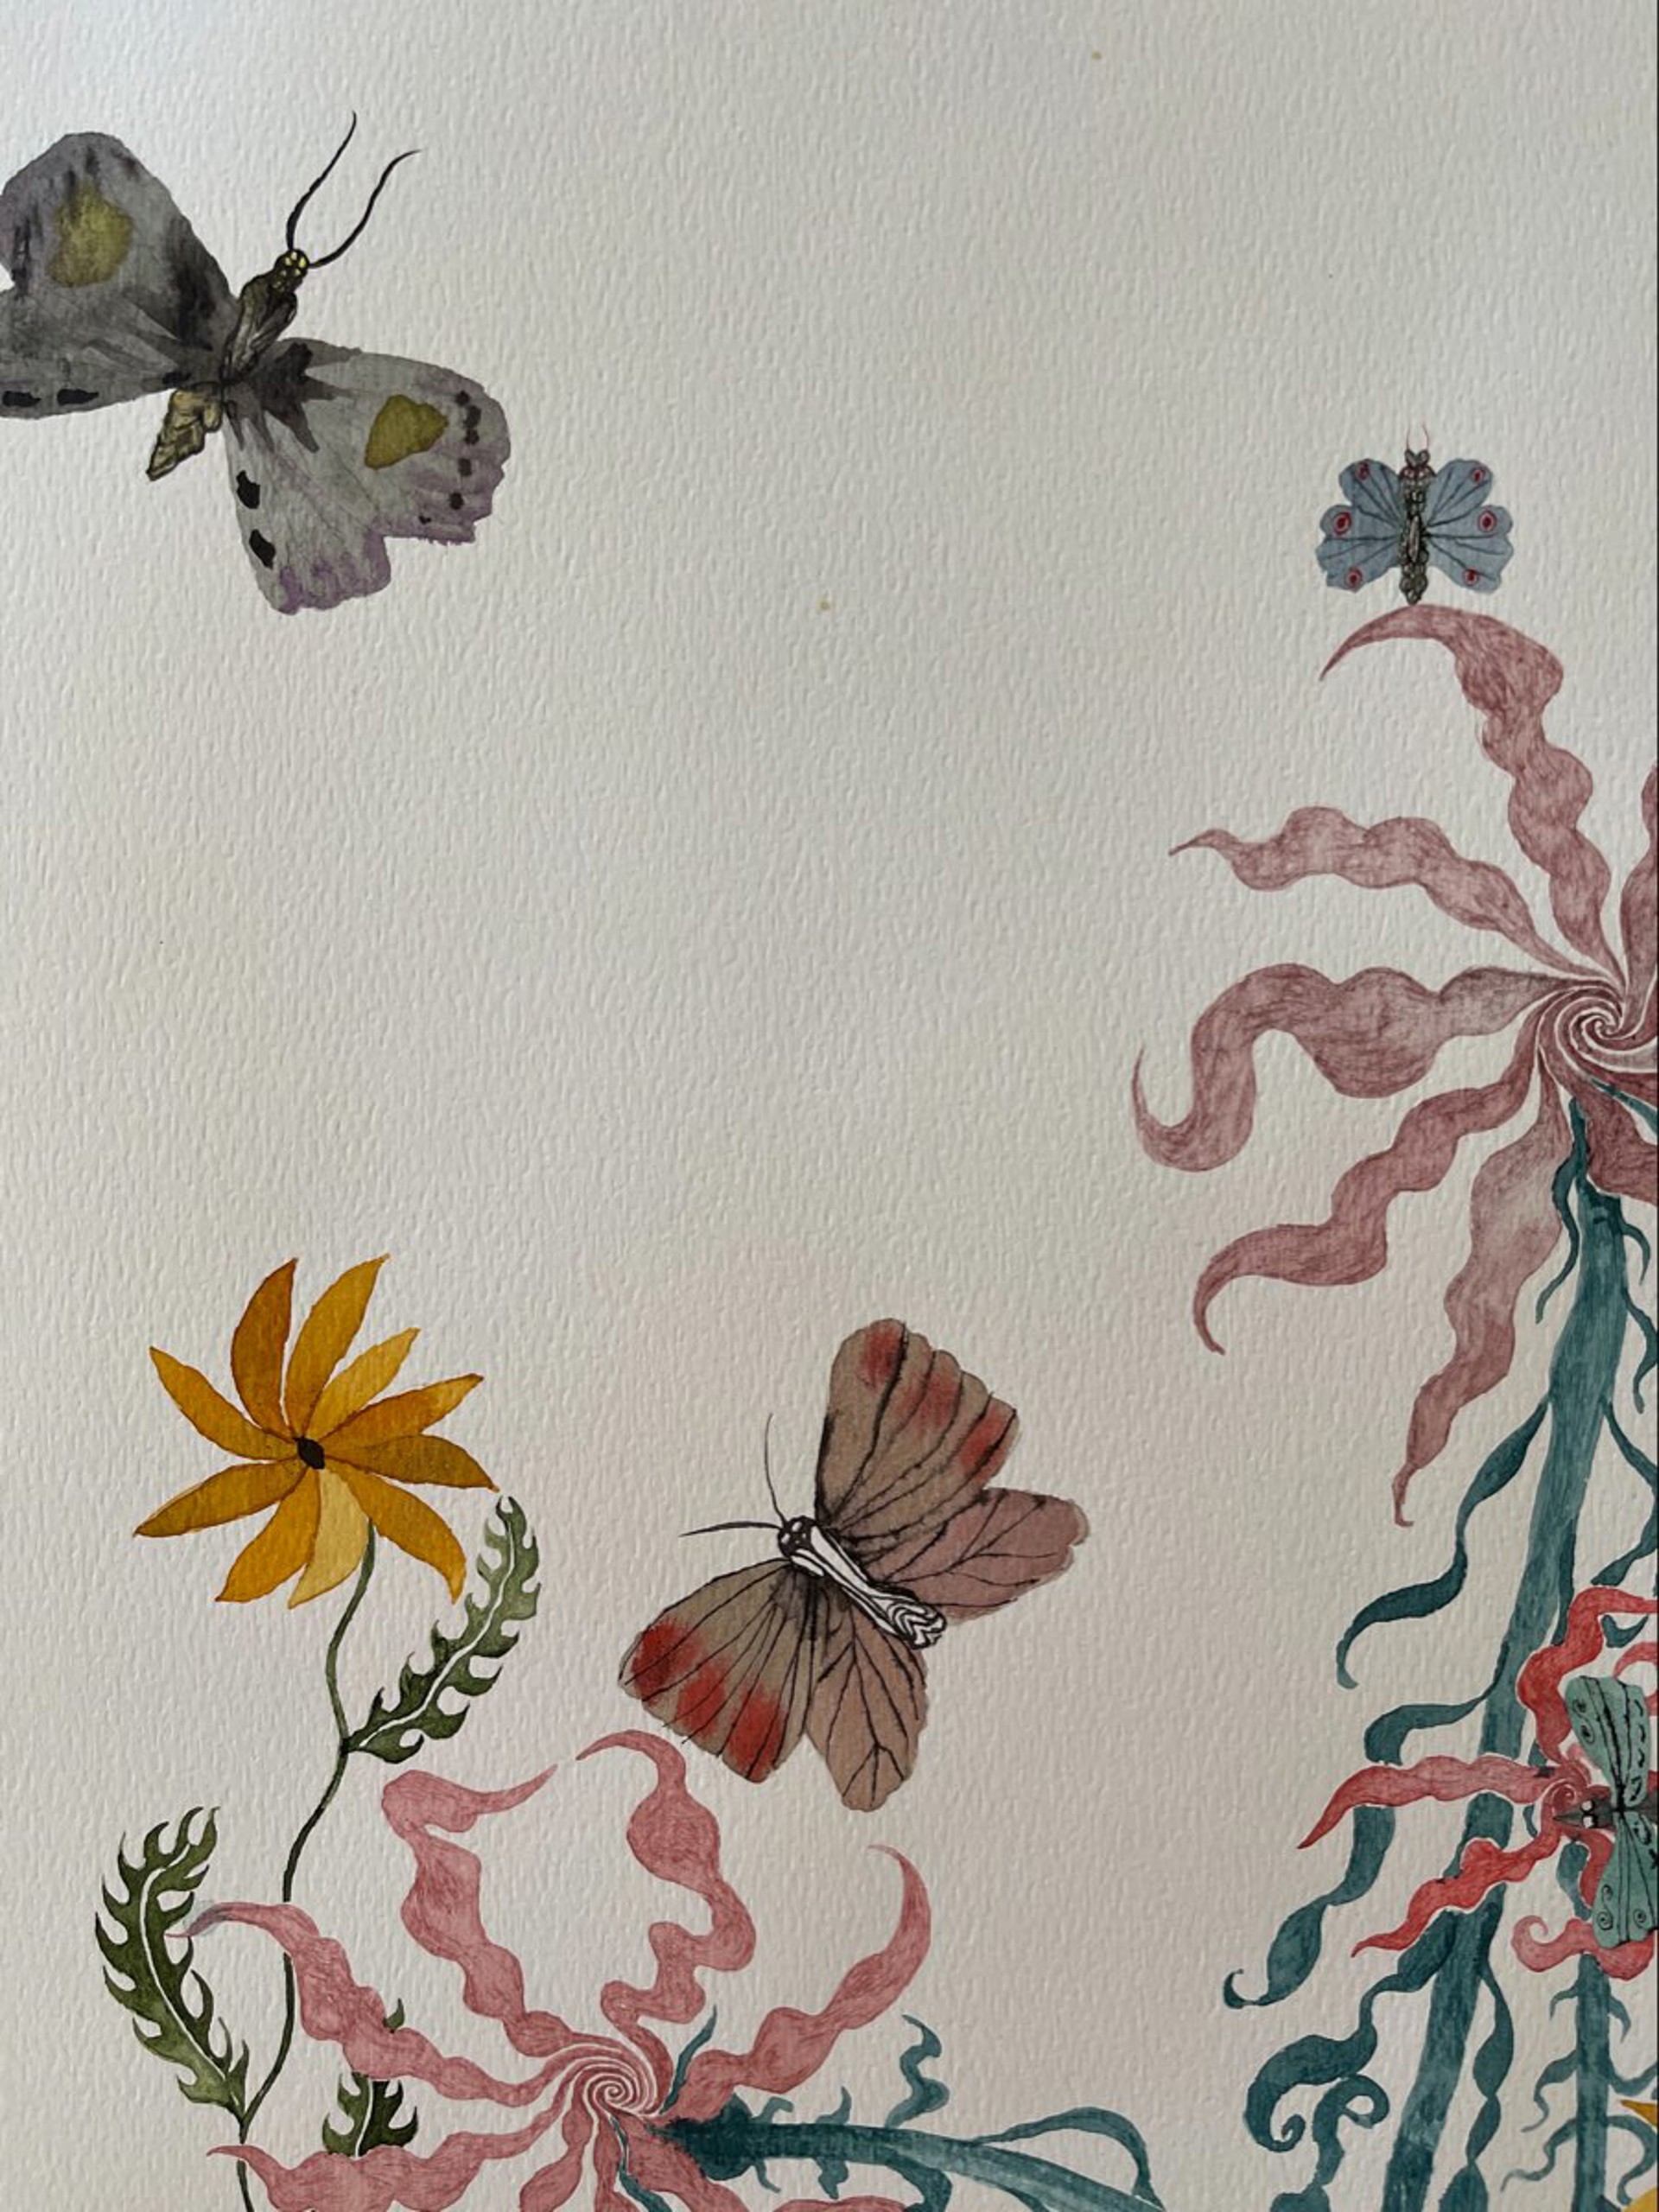 Papillon Fantastique by Alexandra Eastburn